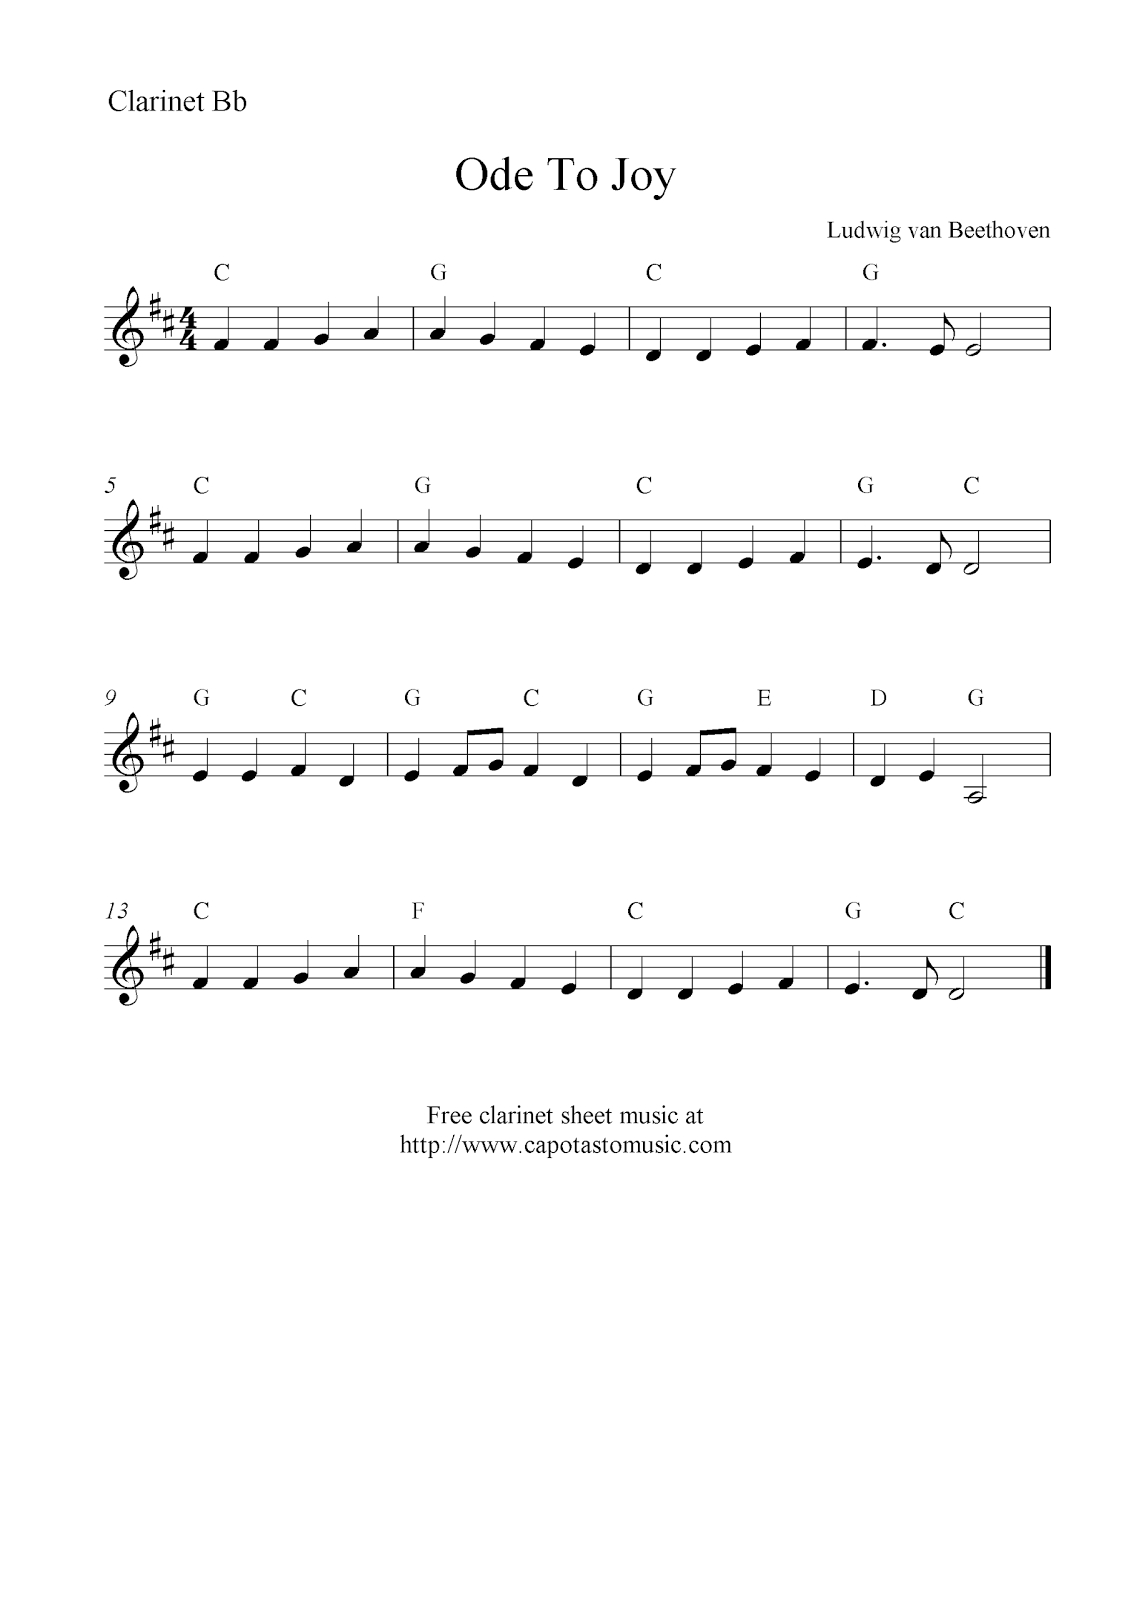 Ode To Joybeethoven, Free Clarinet Sheet Music Notes - Free Sheet Music For Clarinet Printable